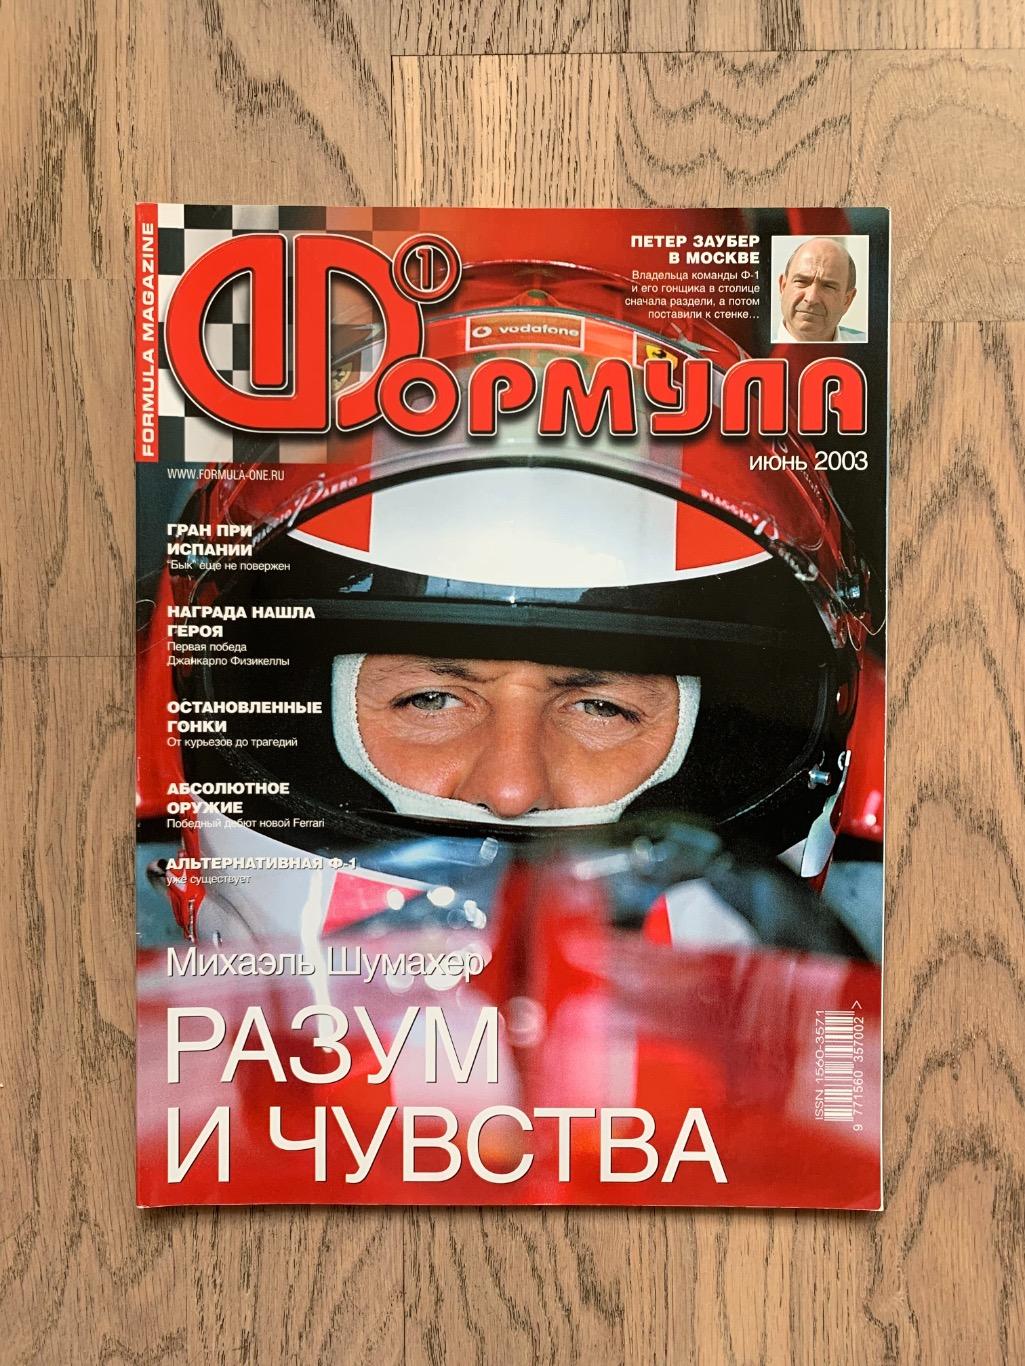 Журнал Формула 1 (Formula Magazine) / июнь 2003